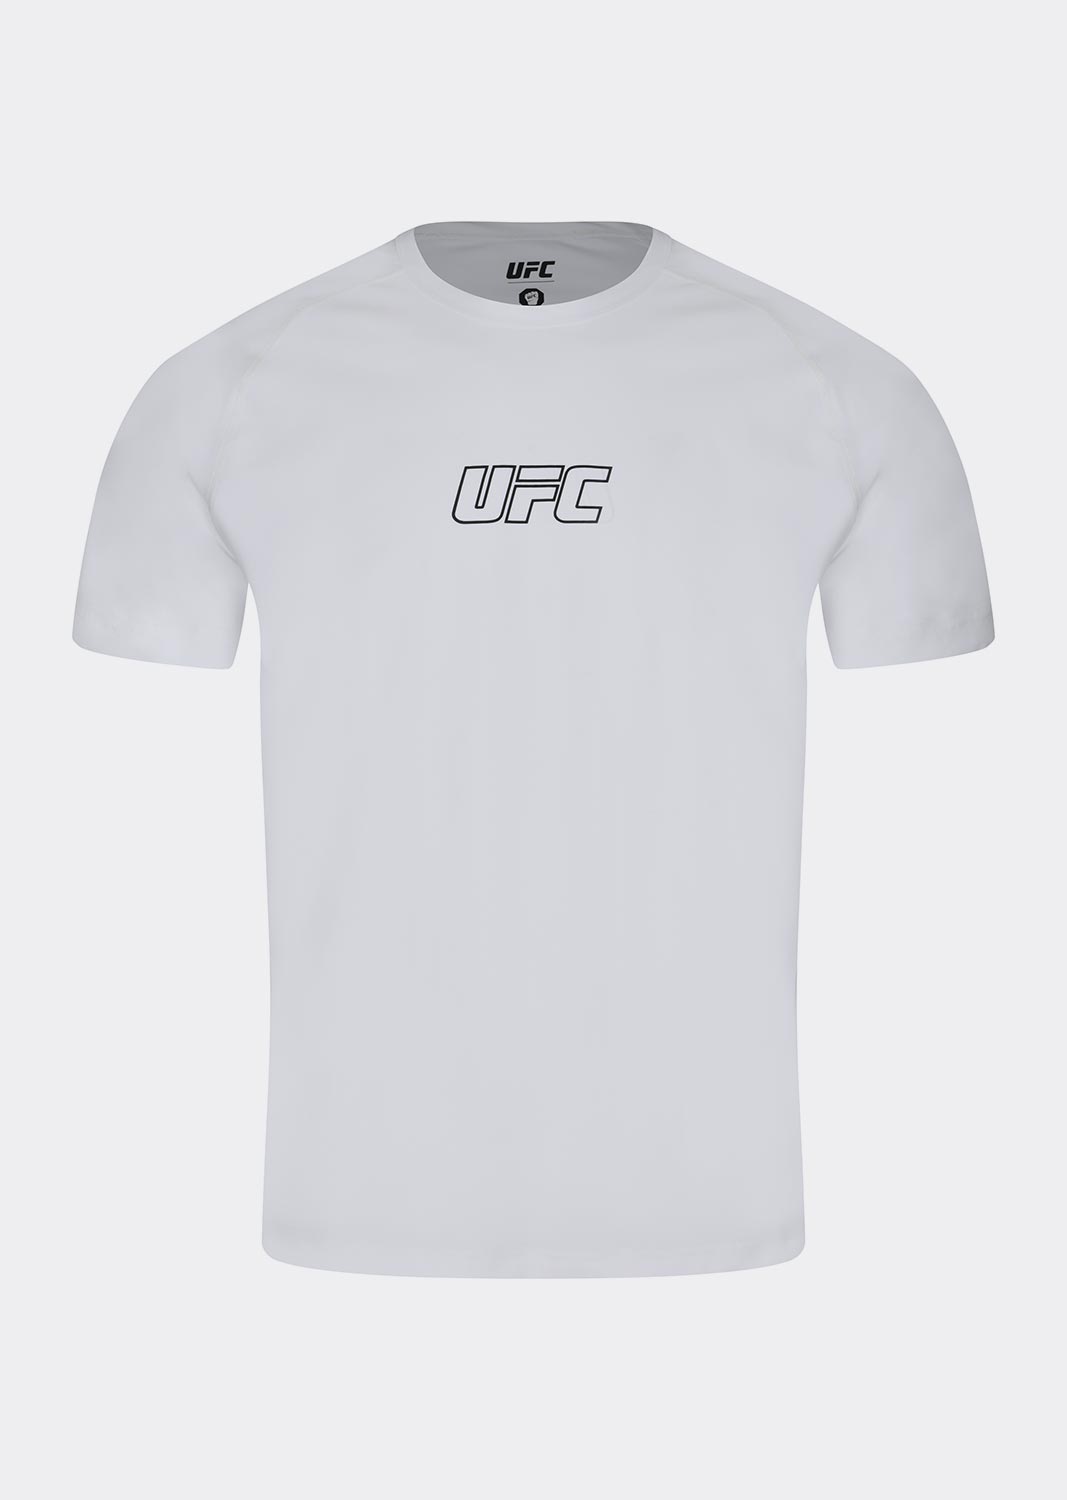 UFC 텐션 머슬핏 반팔 티셔츠 화이트 U4SSU2321OW